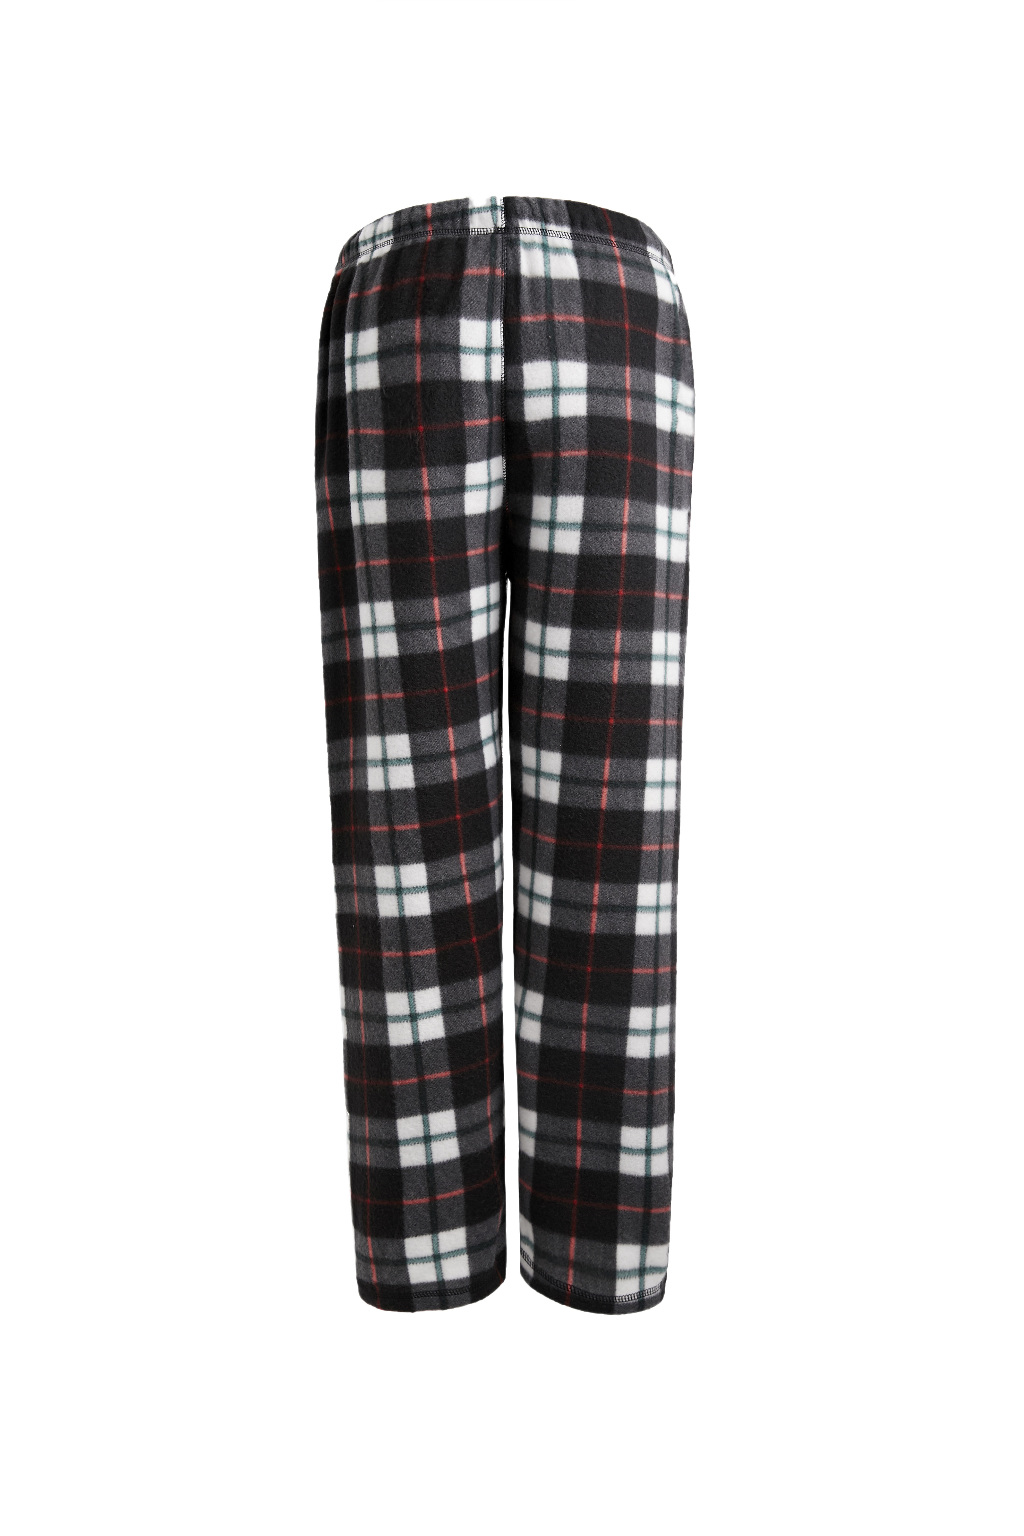 Xmarks Men's Pajama Pants Pockets Modal PJ Pajama Bottoms Sleepwear  Homewear Lounge Pants Black US 8 - Walmart.com